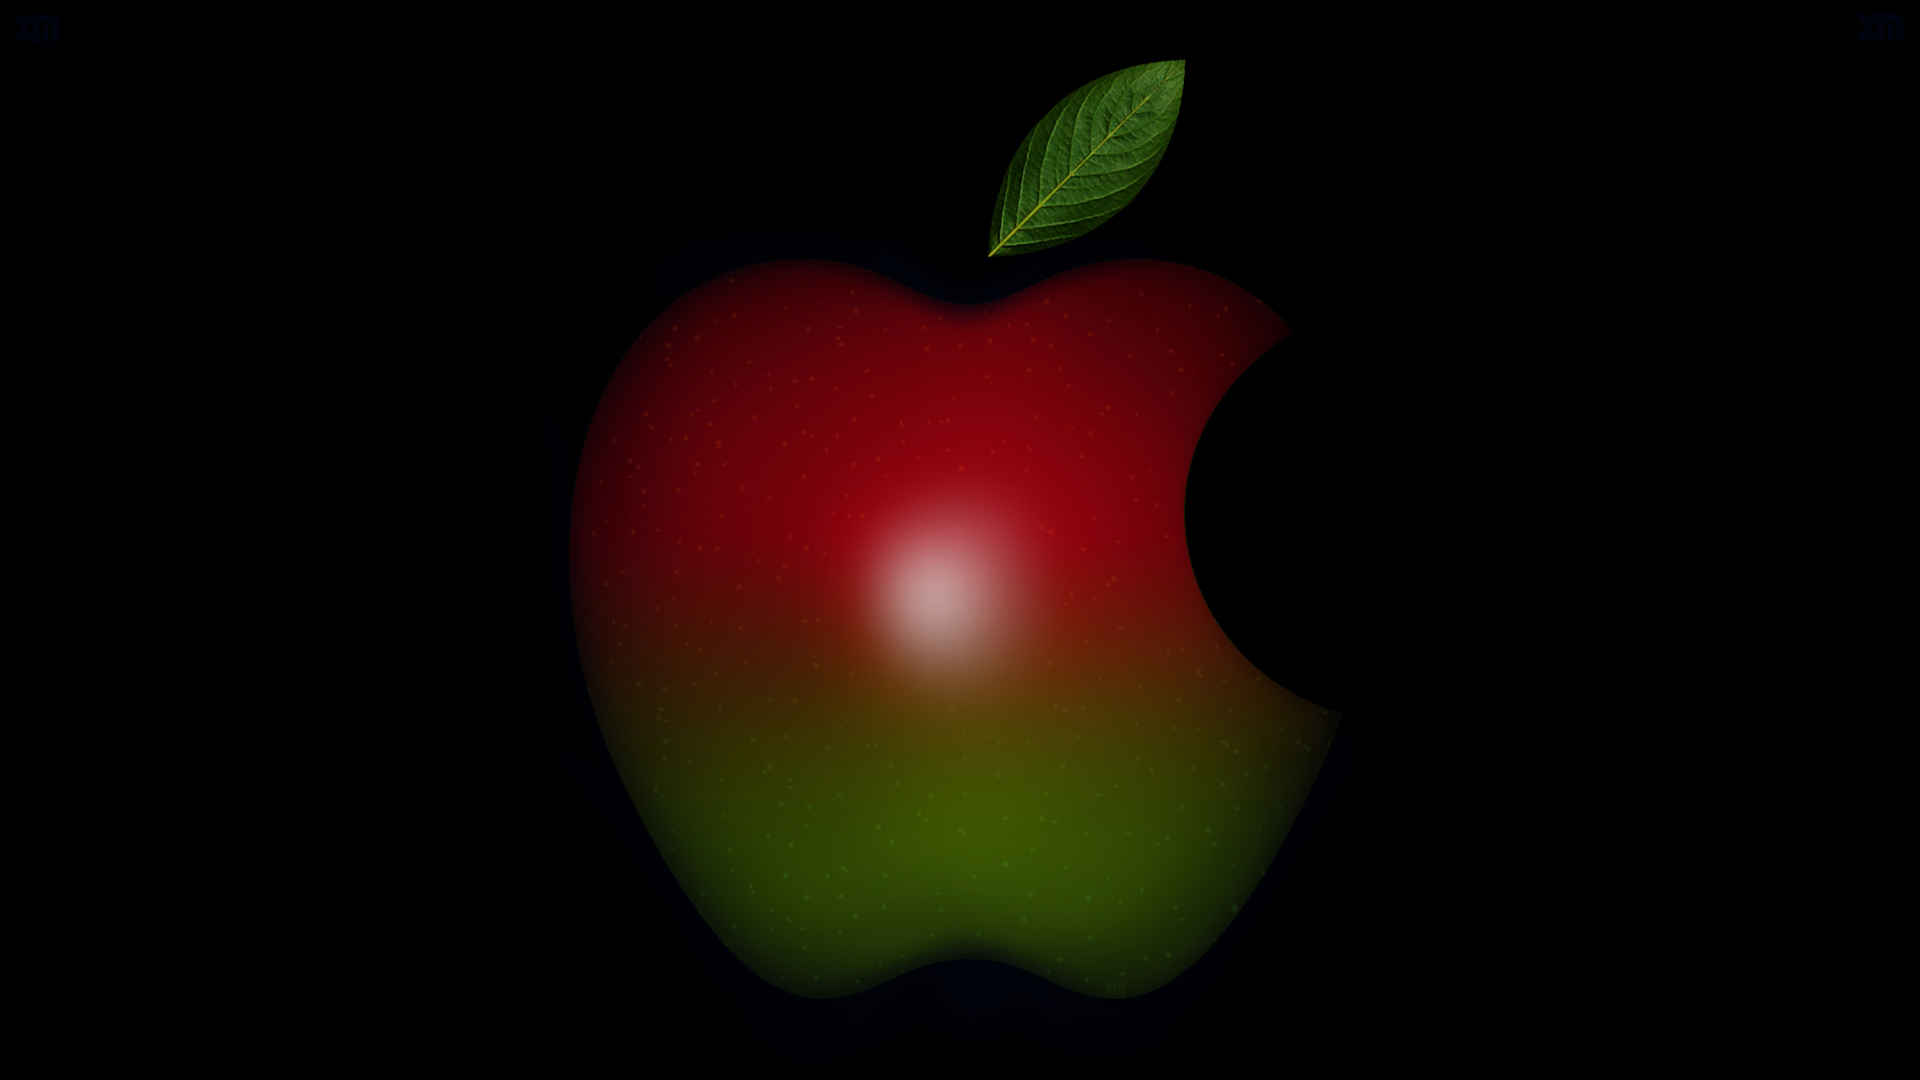 apple logo red grn wallpaper by xenomorph1138 customization wallpaper